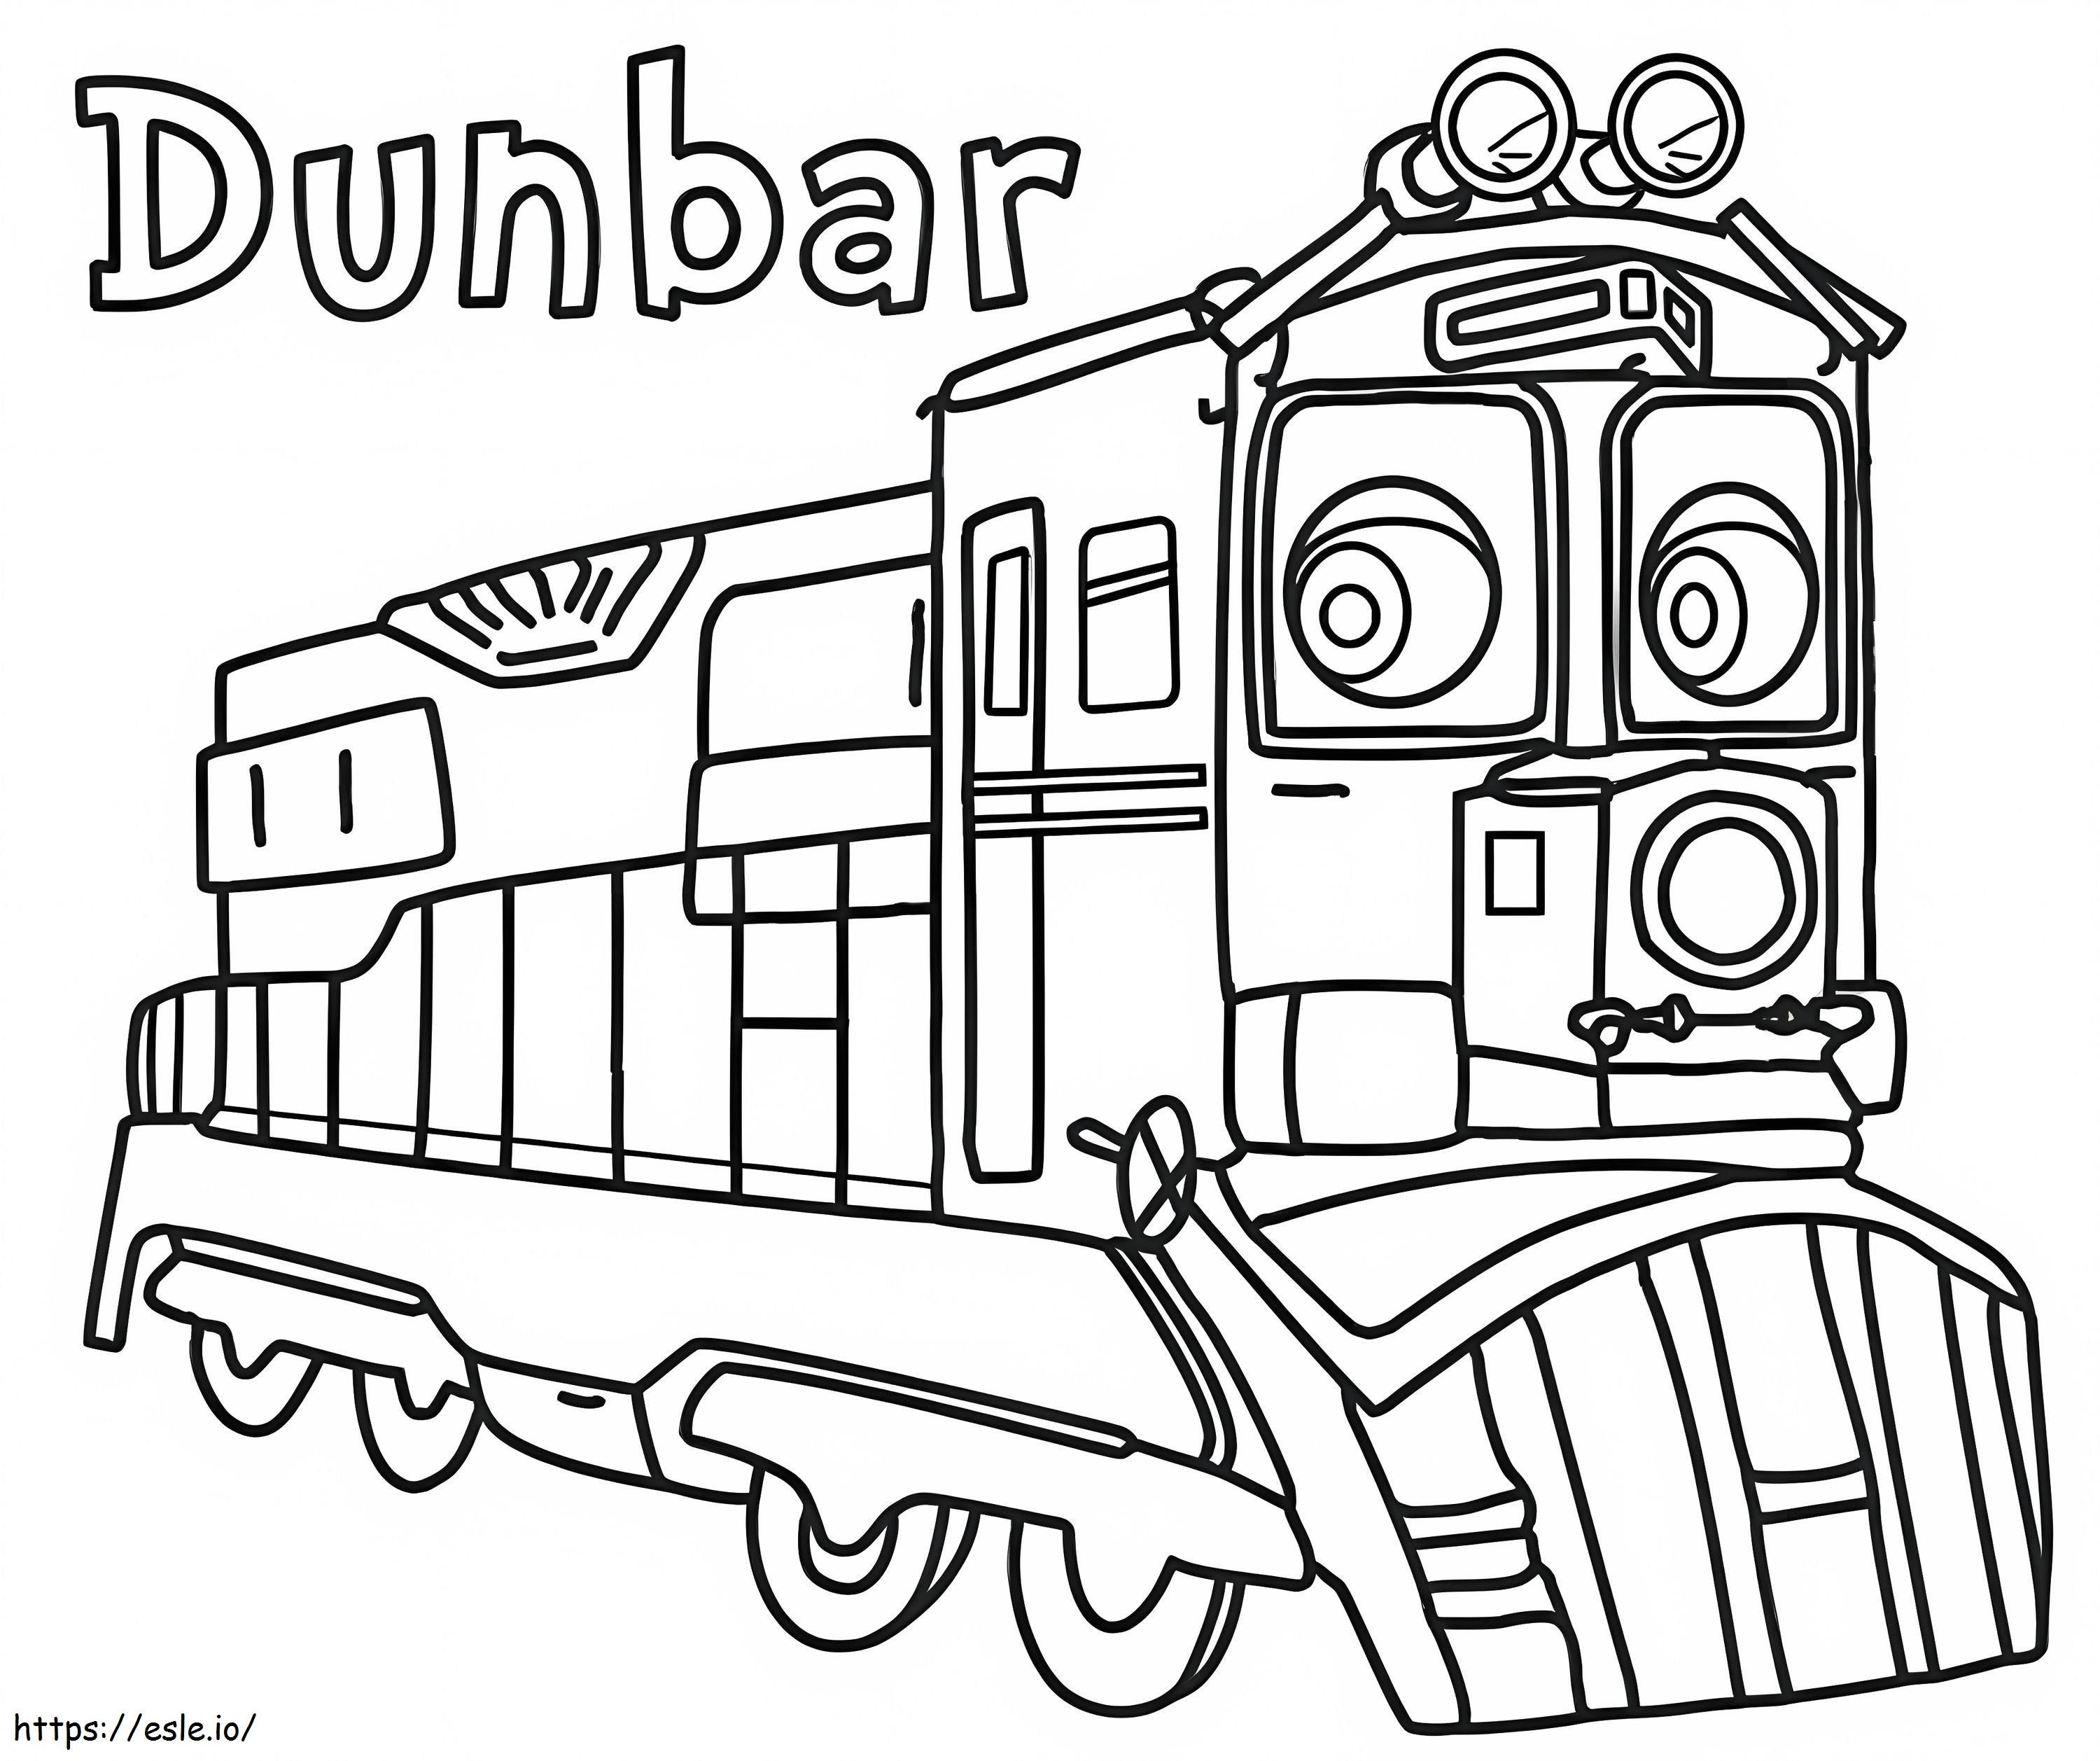 Dunbar From Chuggington coloring page